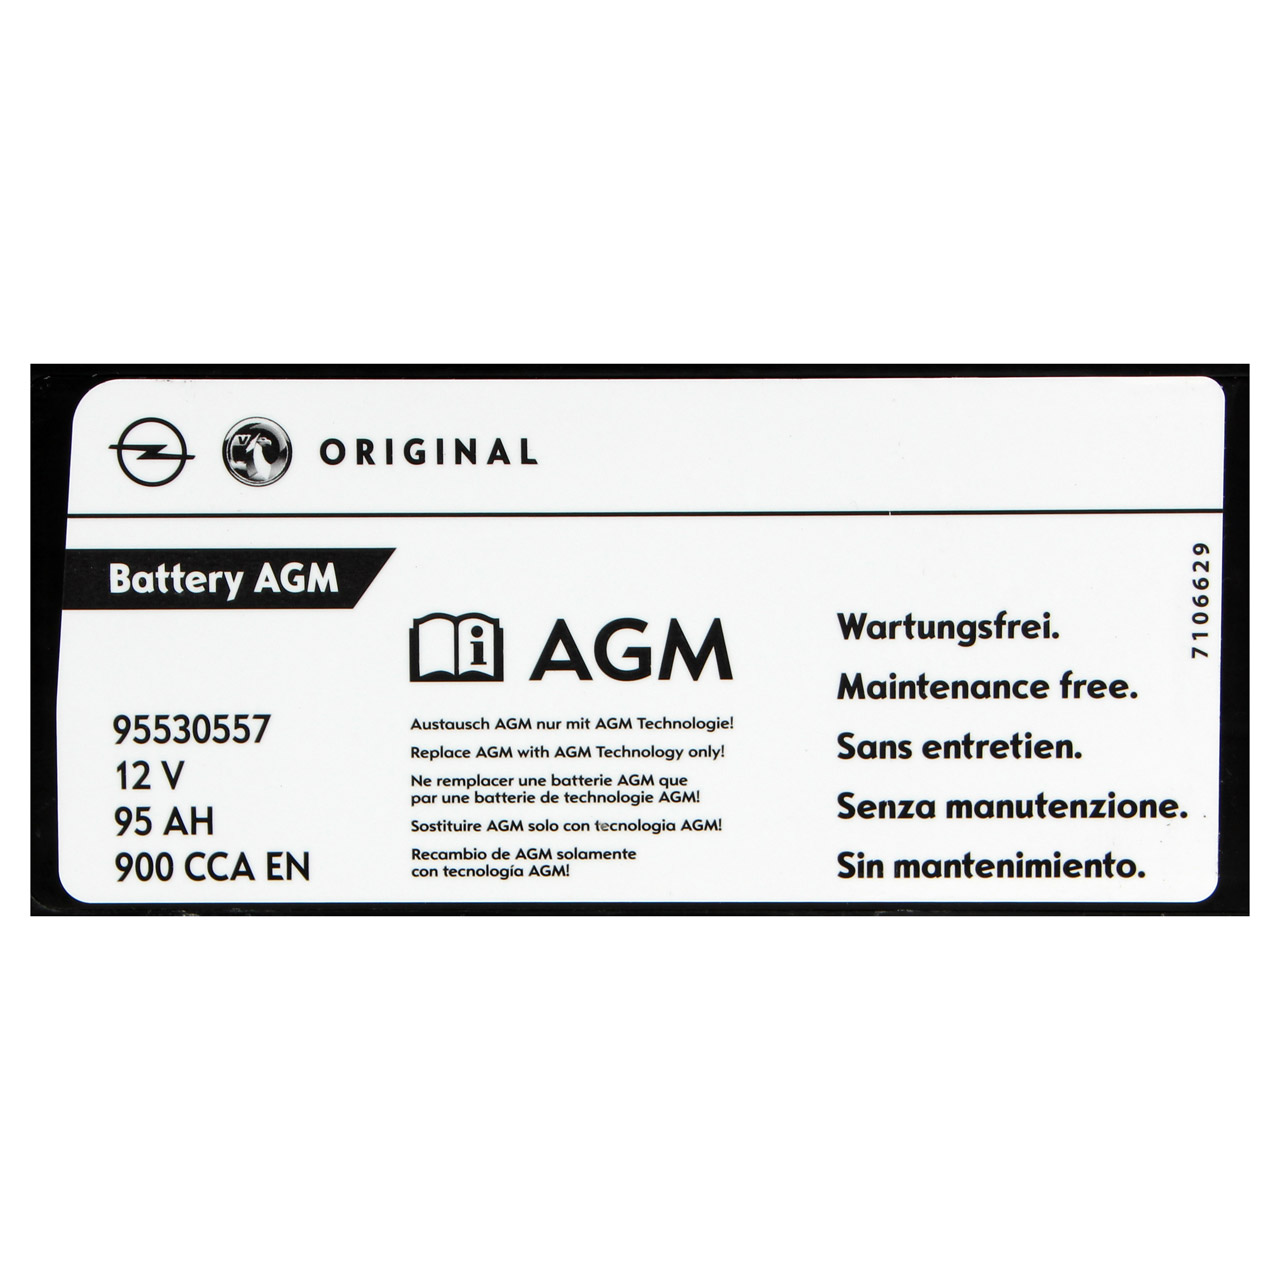 ORIGINAL GM Opel Autobatterie Starterbatterie 12V 95Ah 900 CCA EN 95530557